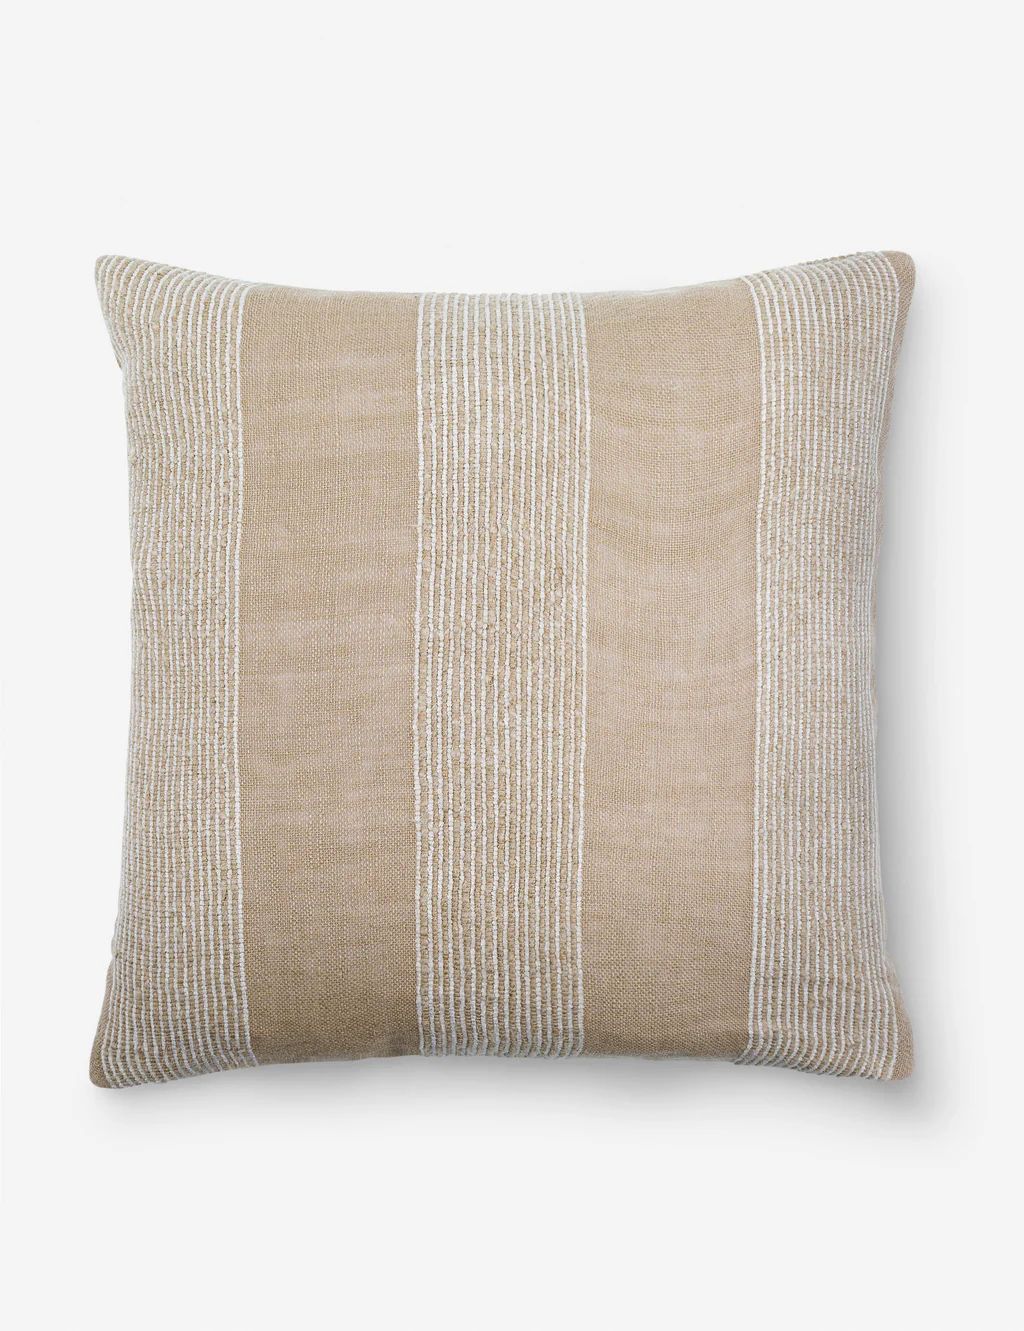 Rosero Linen Pillow | Lulu and Georgia 